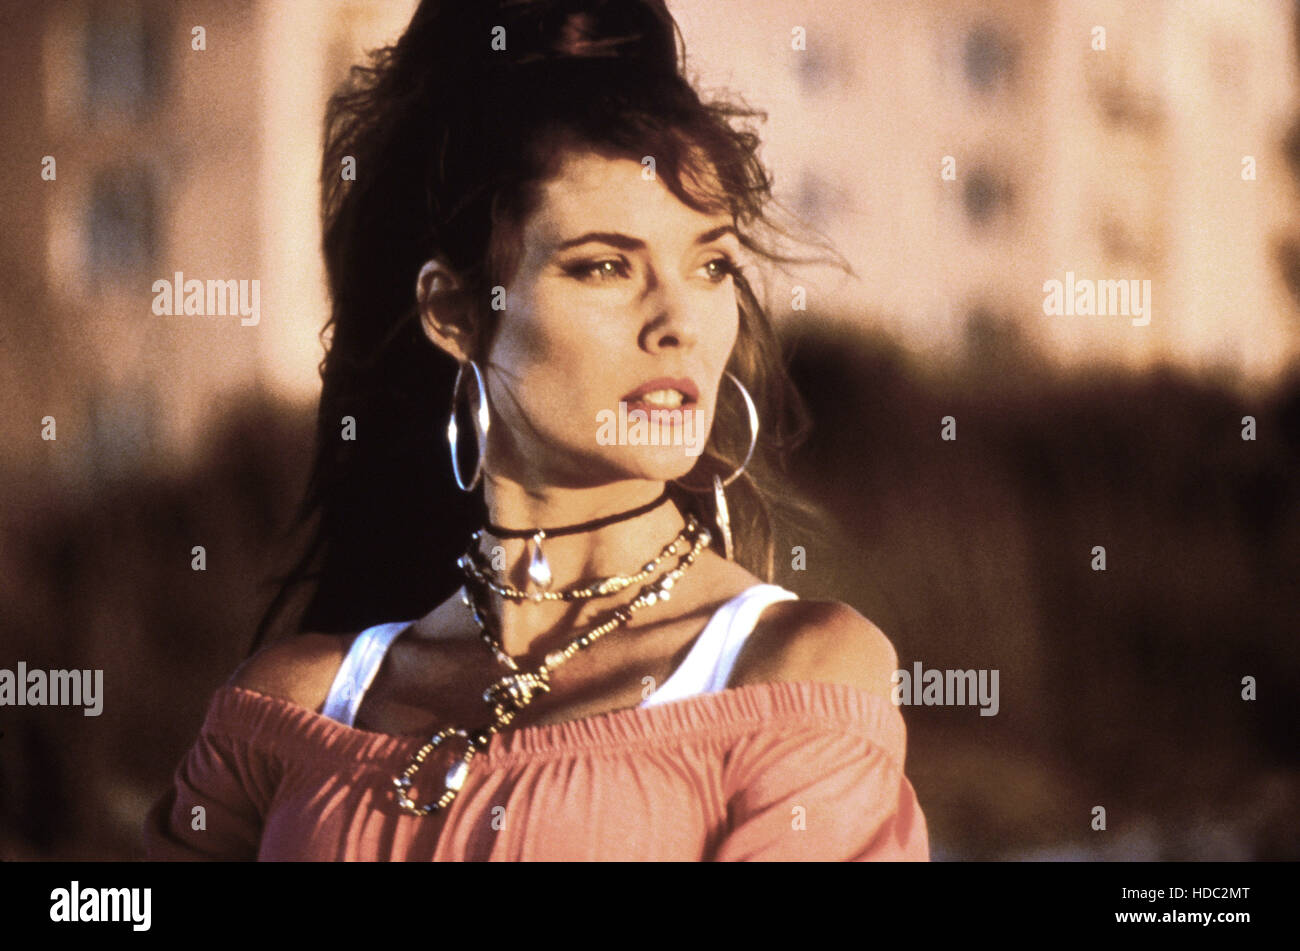 THUNDER IN PARADISE, Carol Alt, 1994, © Buena Vista Television/courtesy Everett Collection Stock Photo